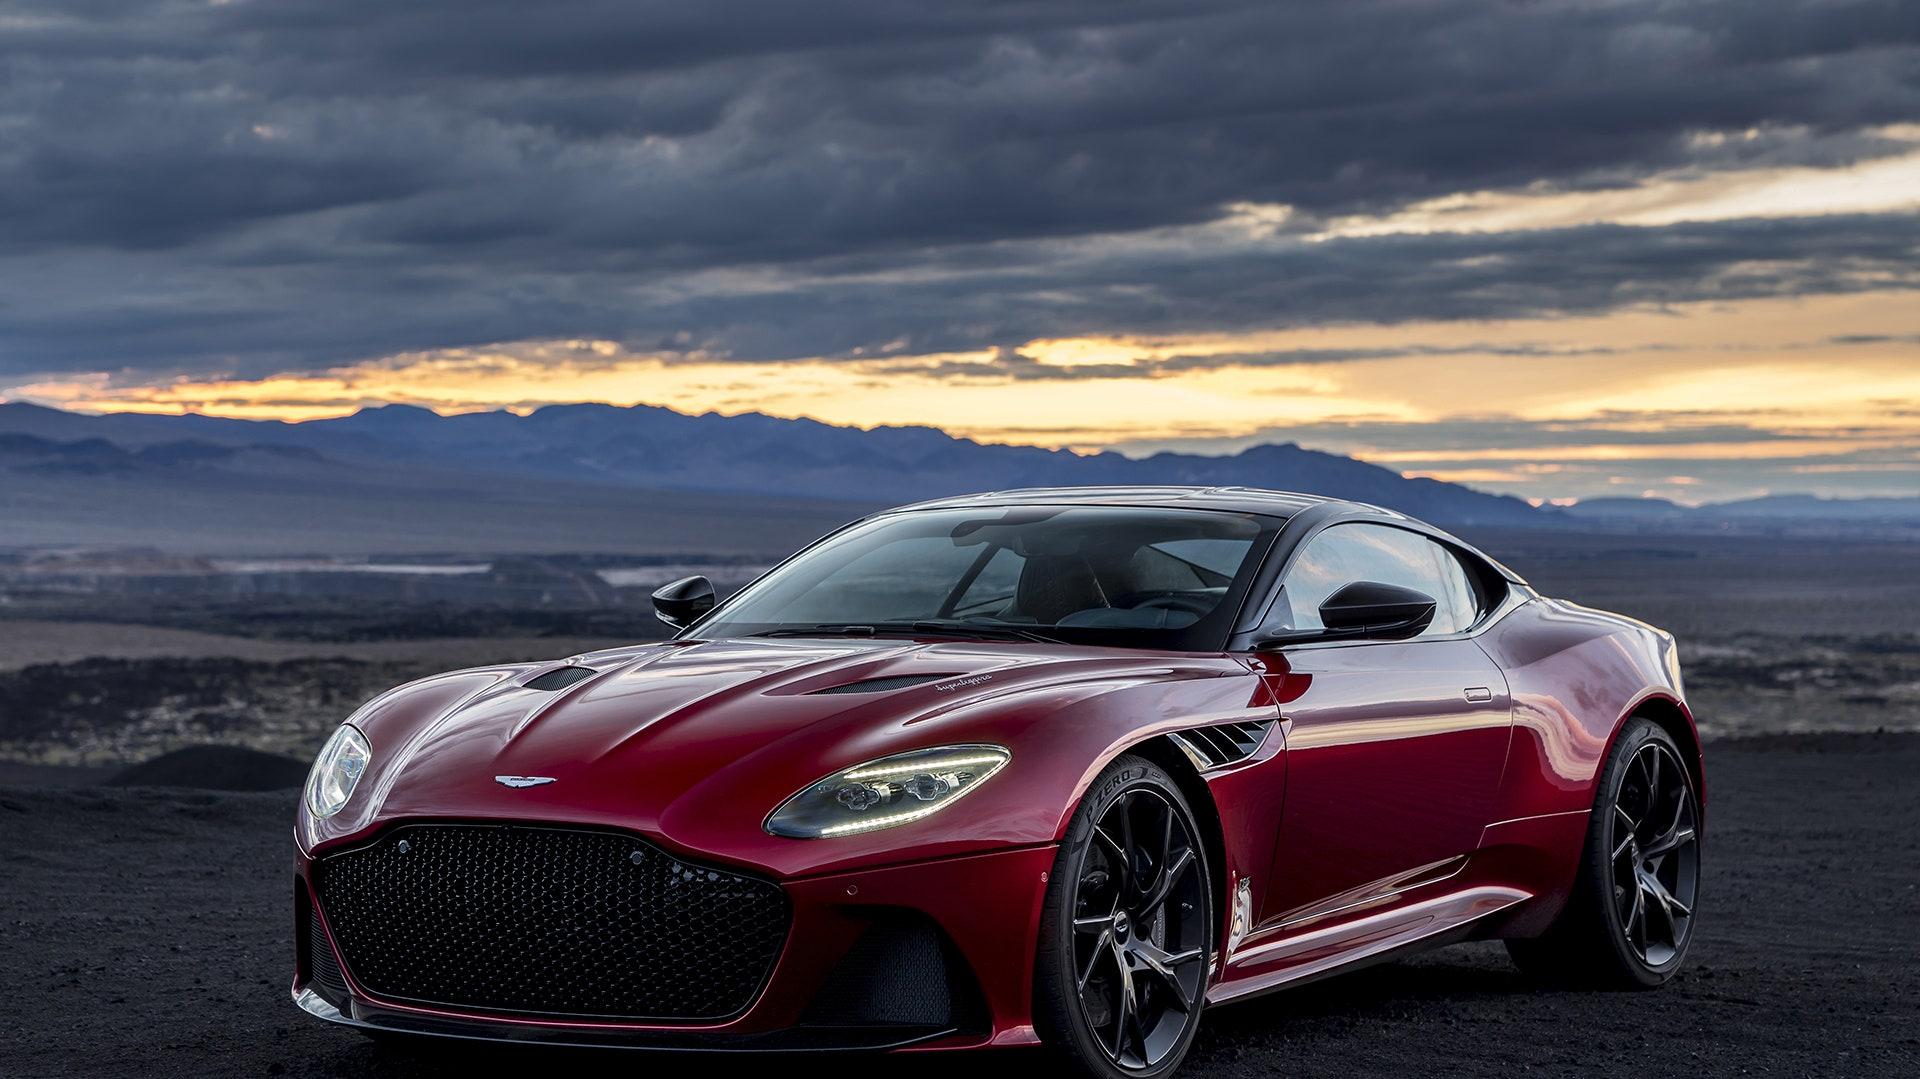 Aston Martin Dbs Superleggera Re The Best Car